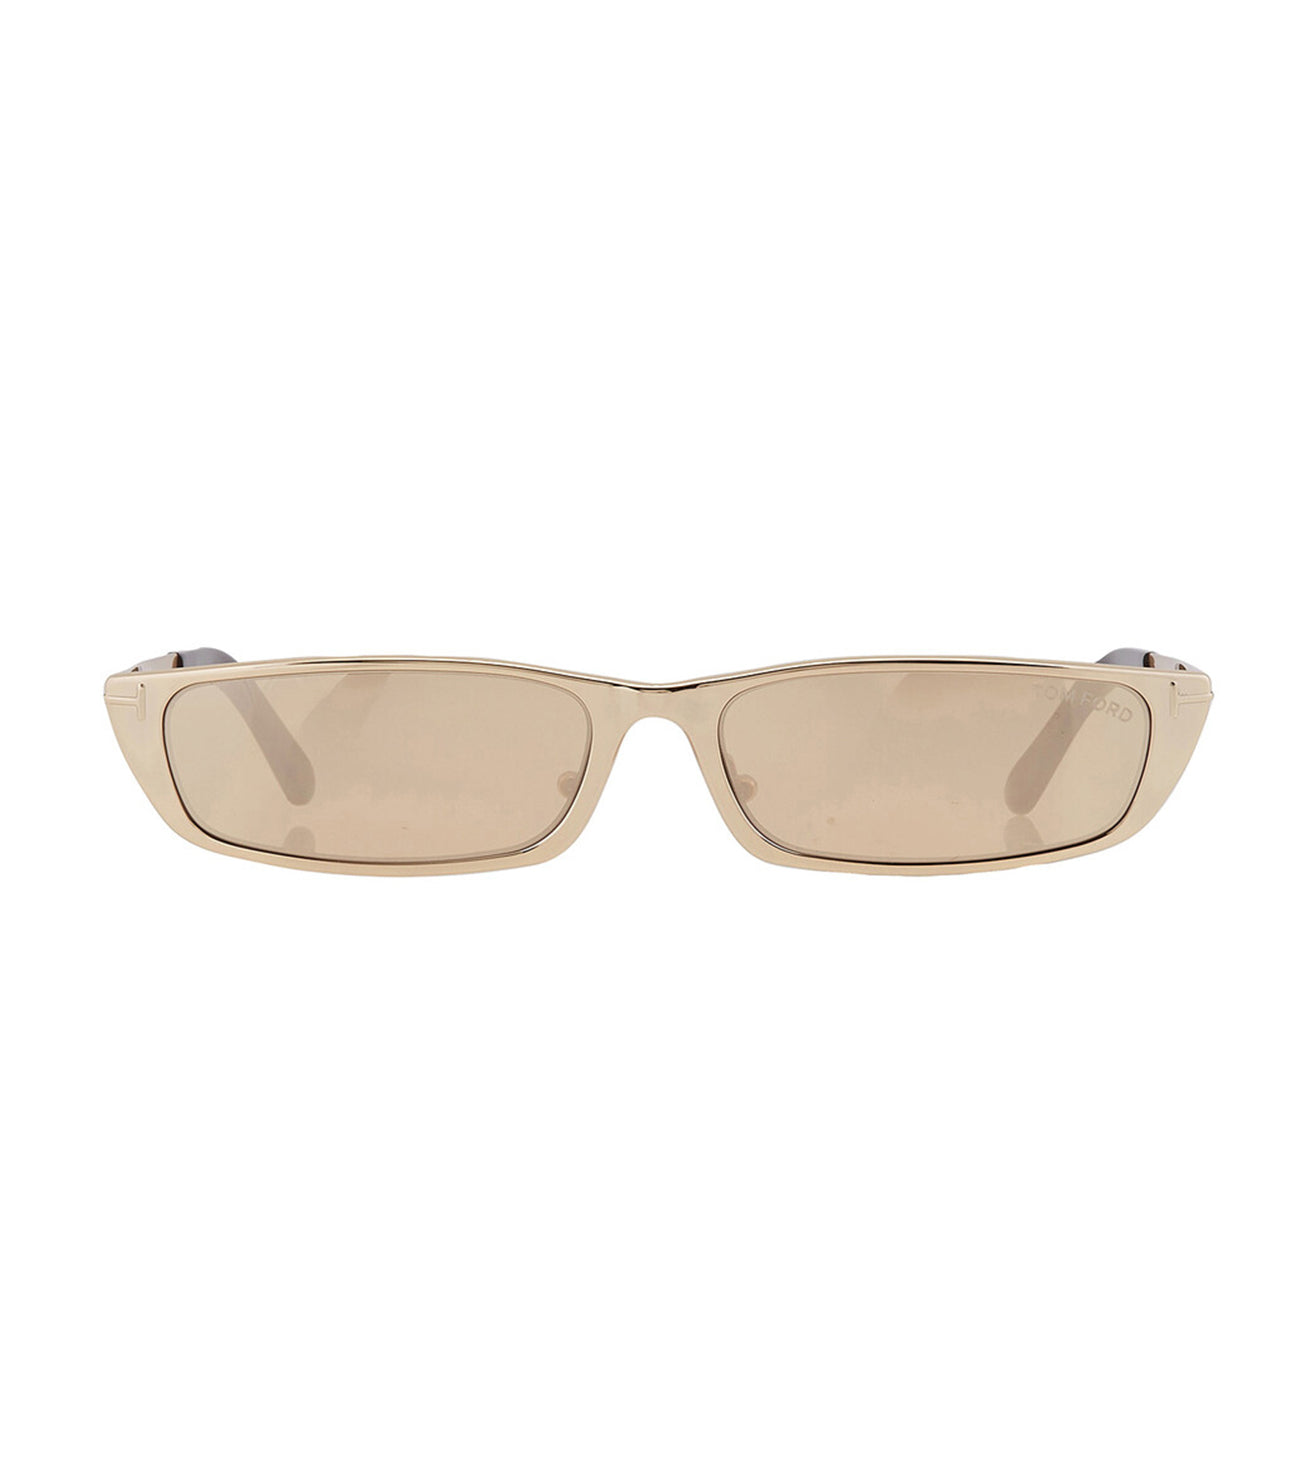 Tom Ford Everett Unisex Brown-mirrored Rectangular Sunglasses